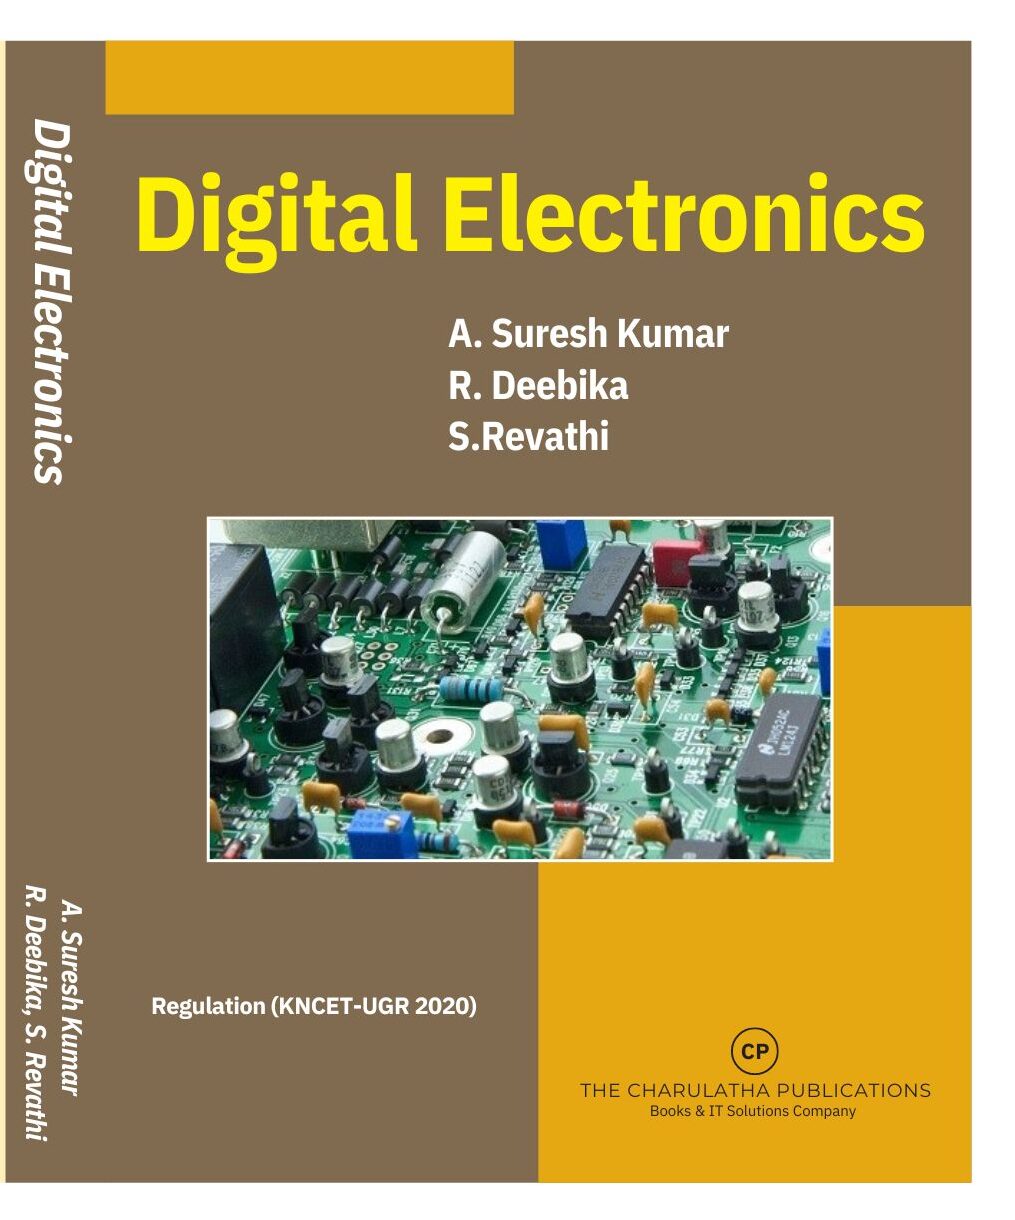 The charulatha publications Digital Electronics